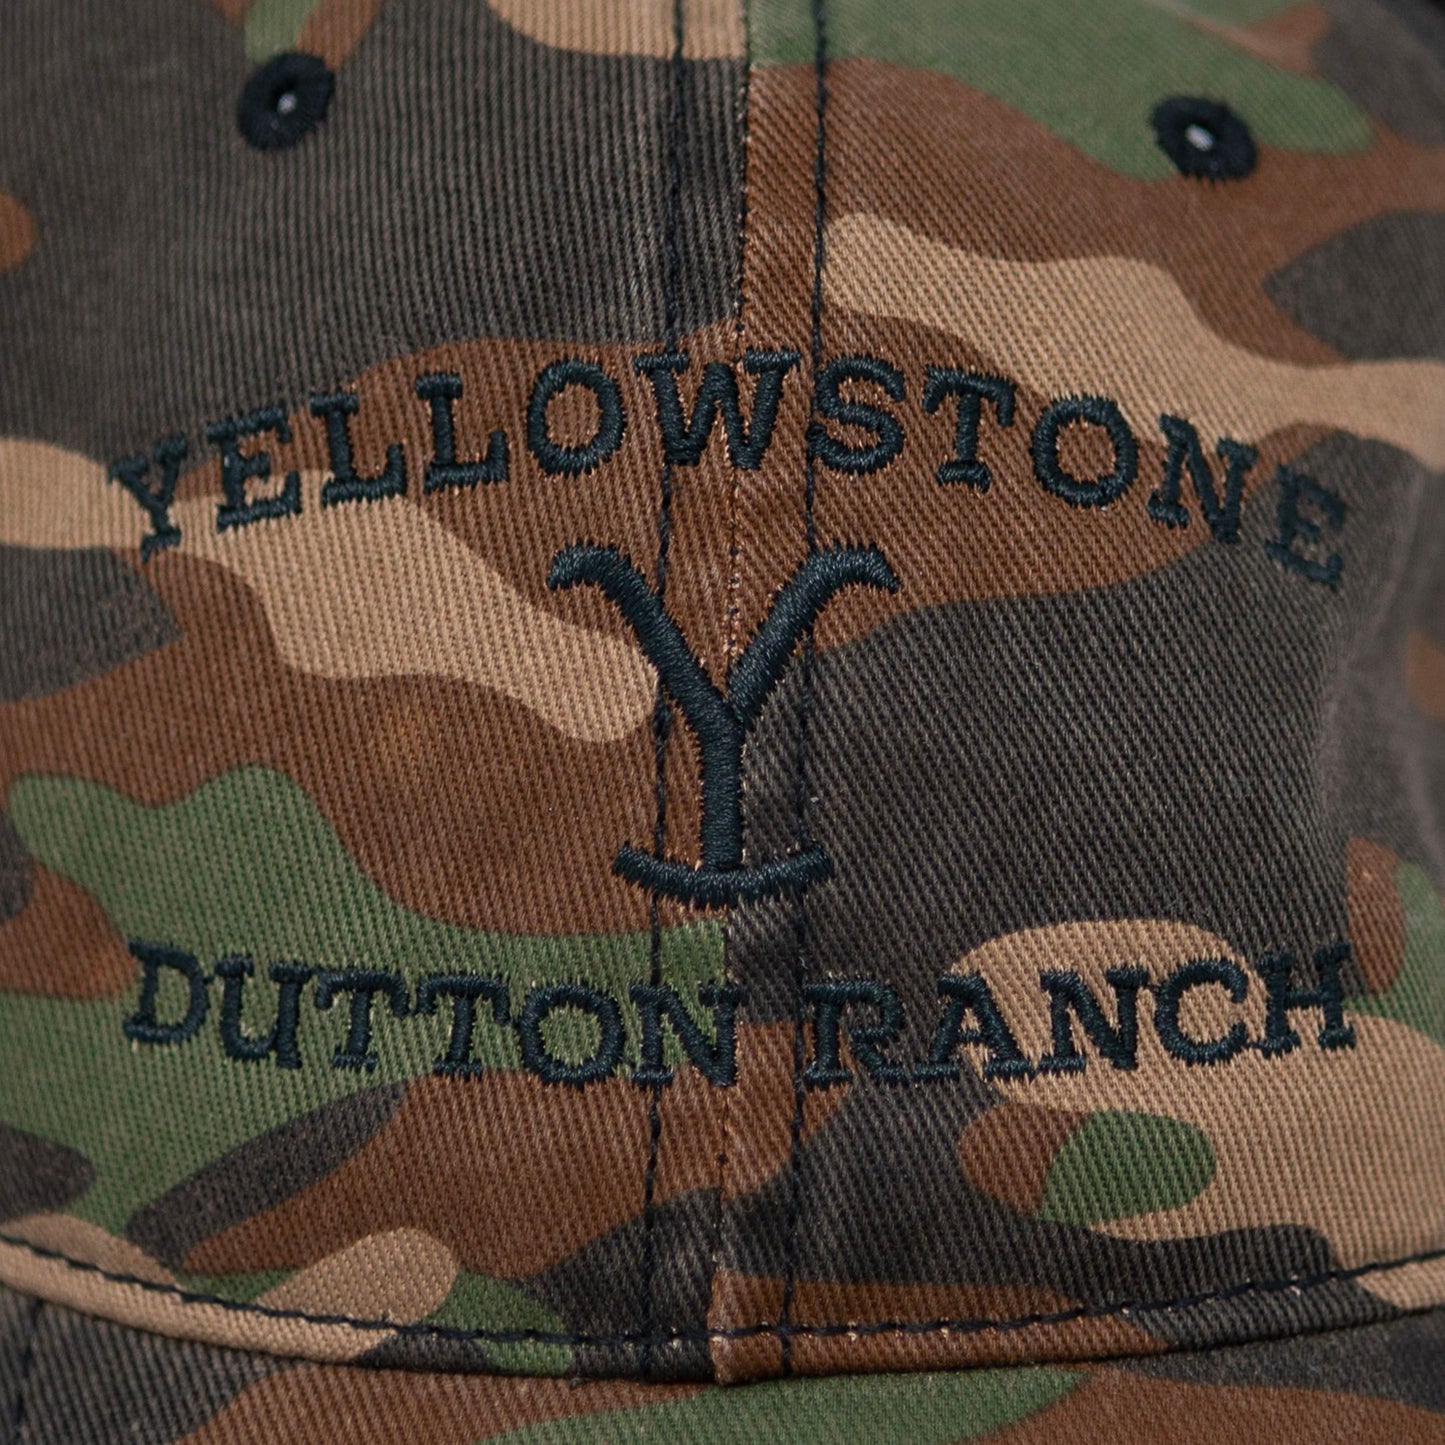 Yellowstone Dutton Ranch Logo As Seen On Camo Hat